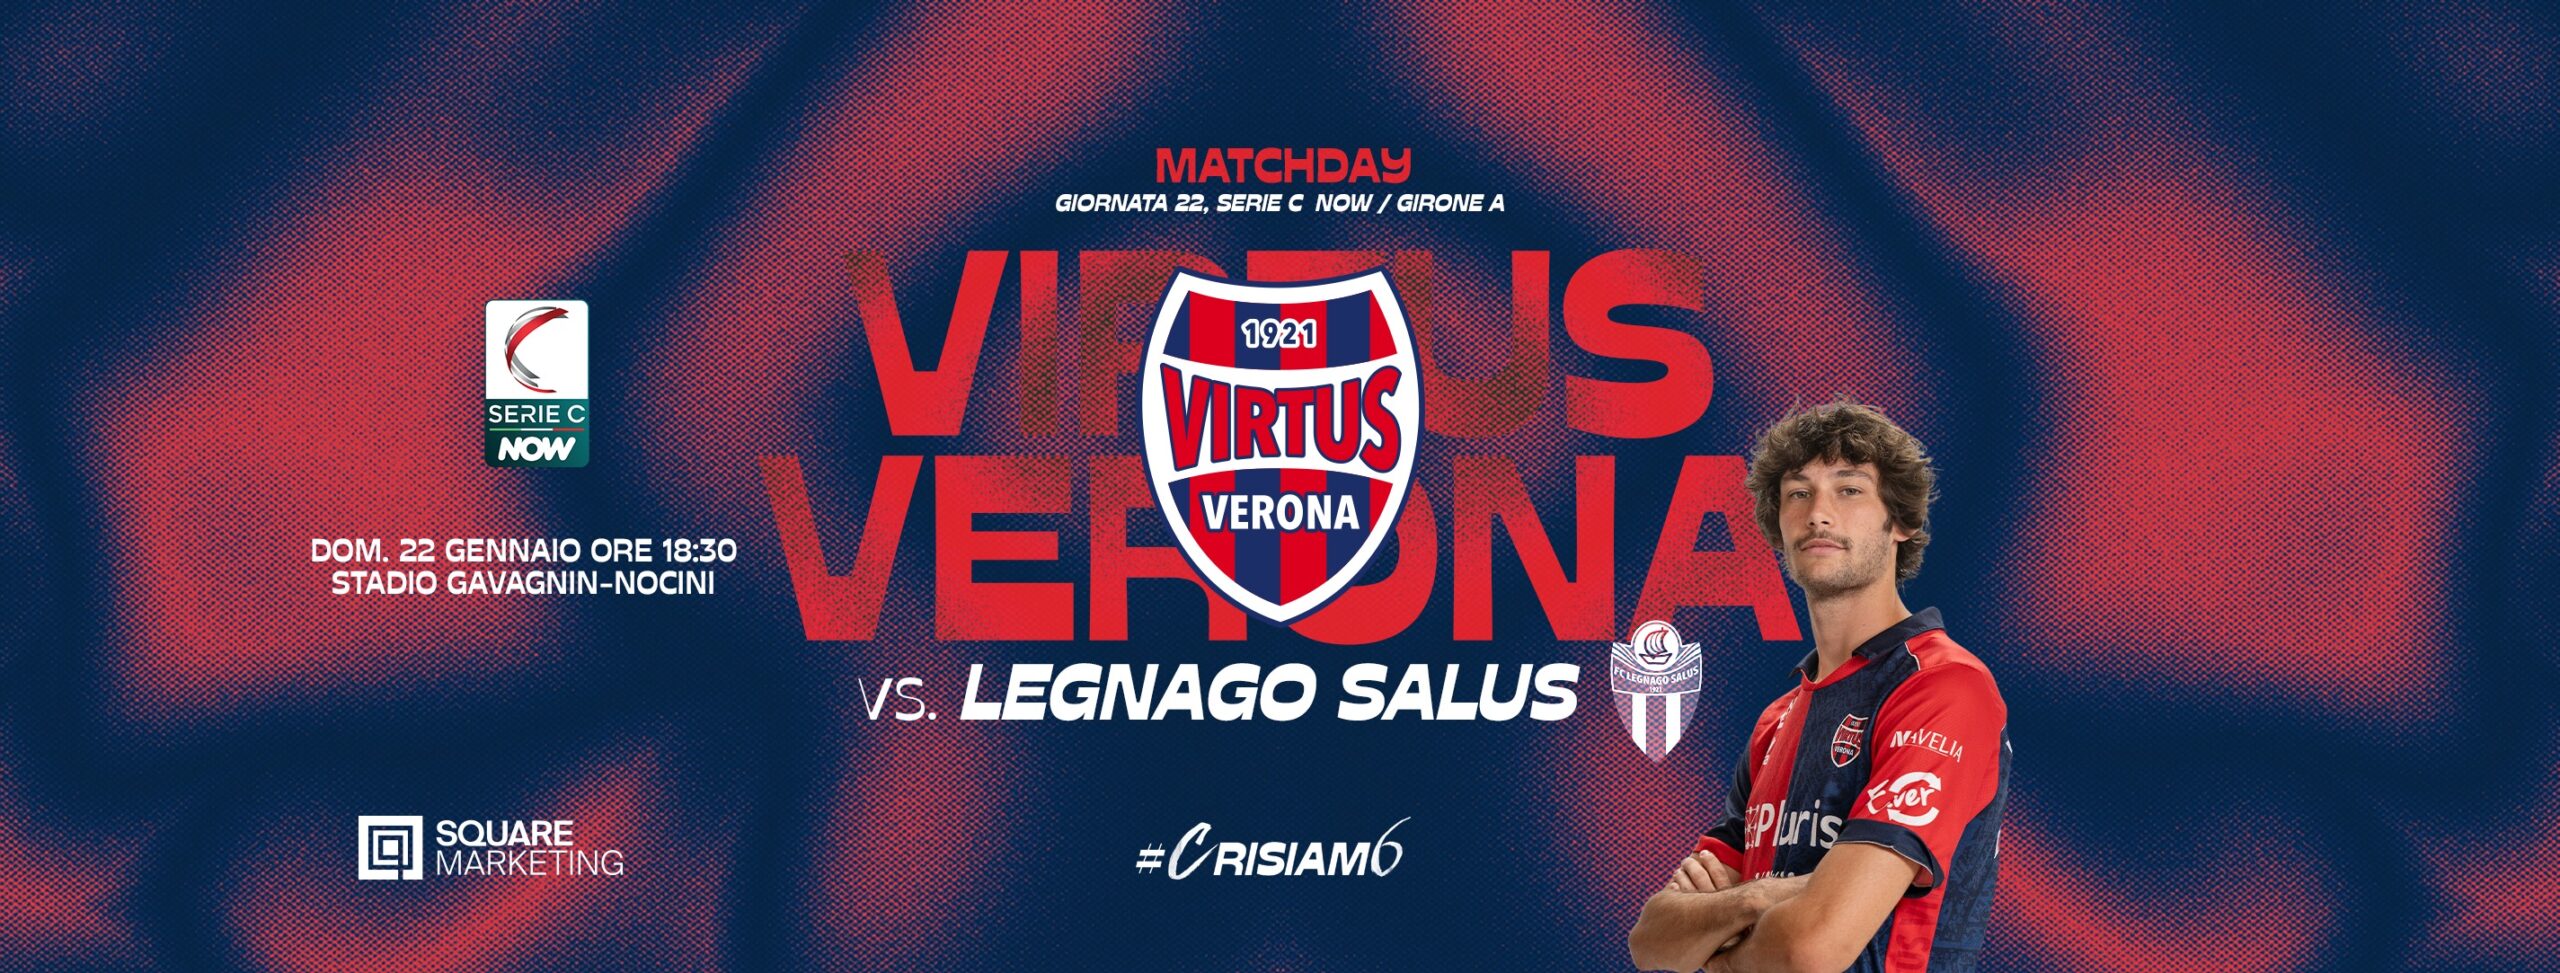 Serie C: alle 18.30 il derby veronese V. Verona-Legnago